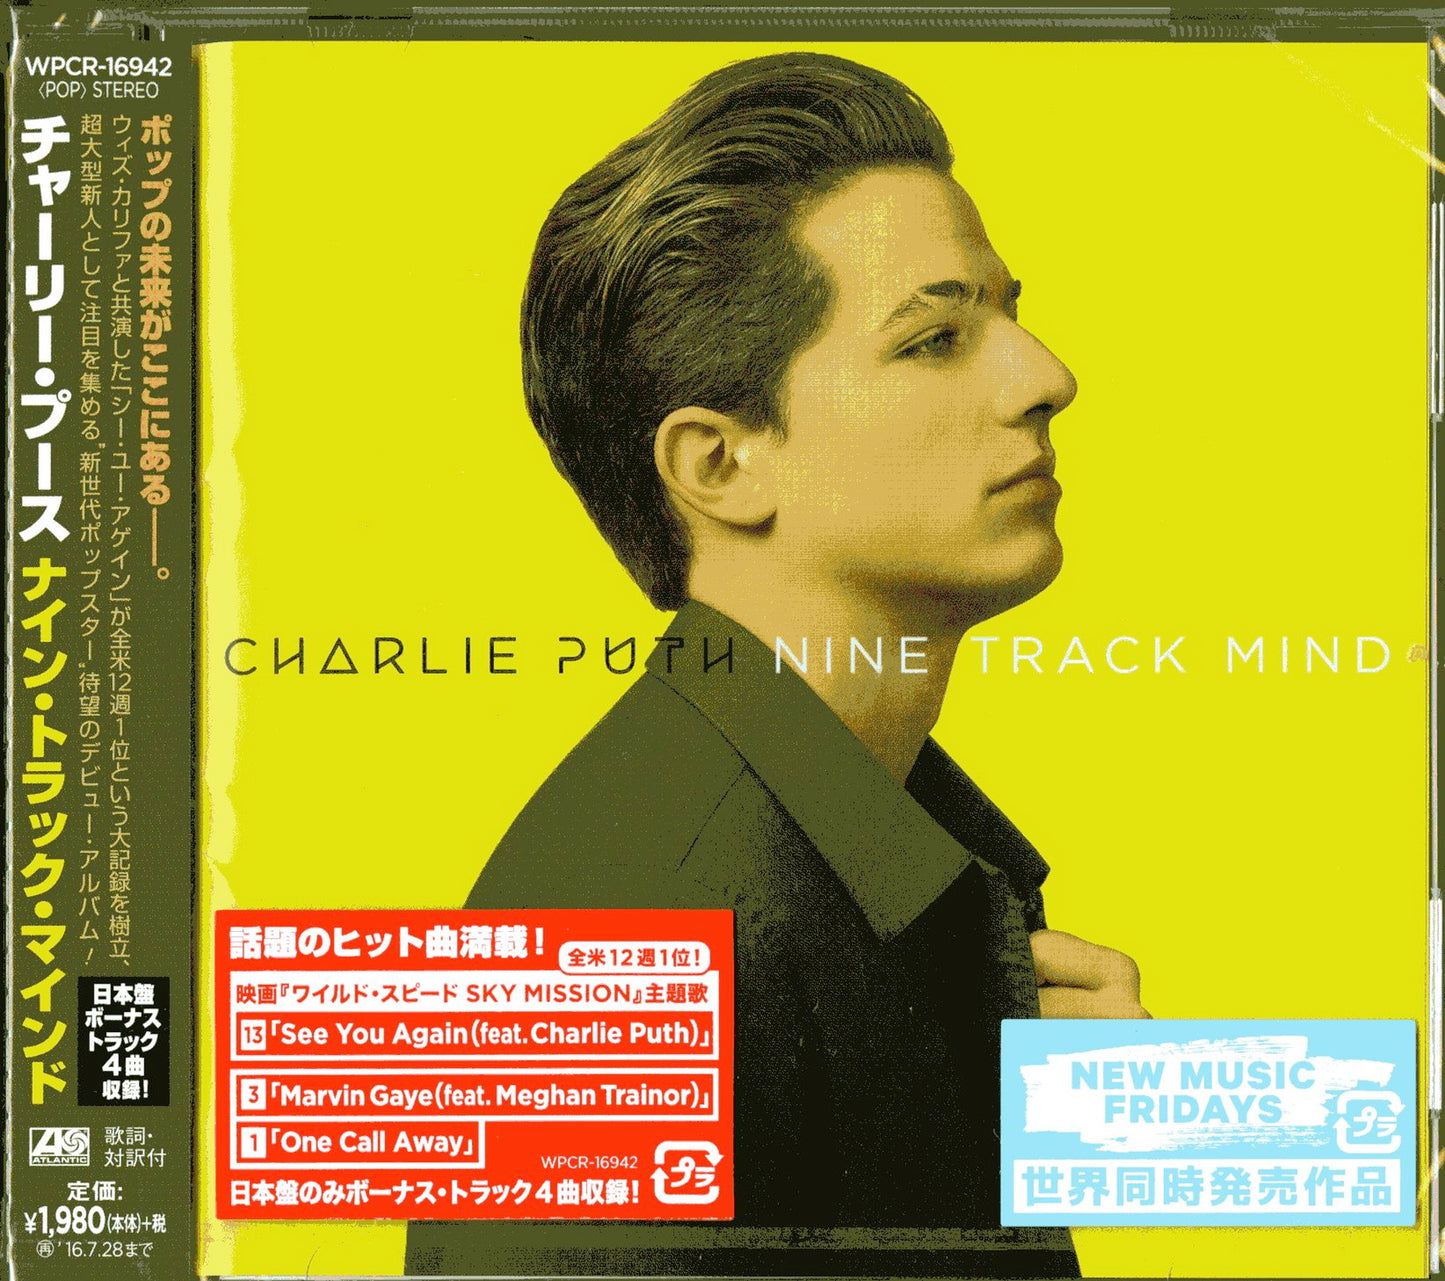 Charlie Puth - Nine Track Mind - Japan  CD Bonus Track